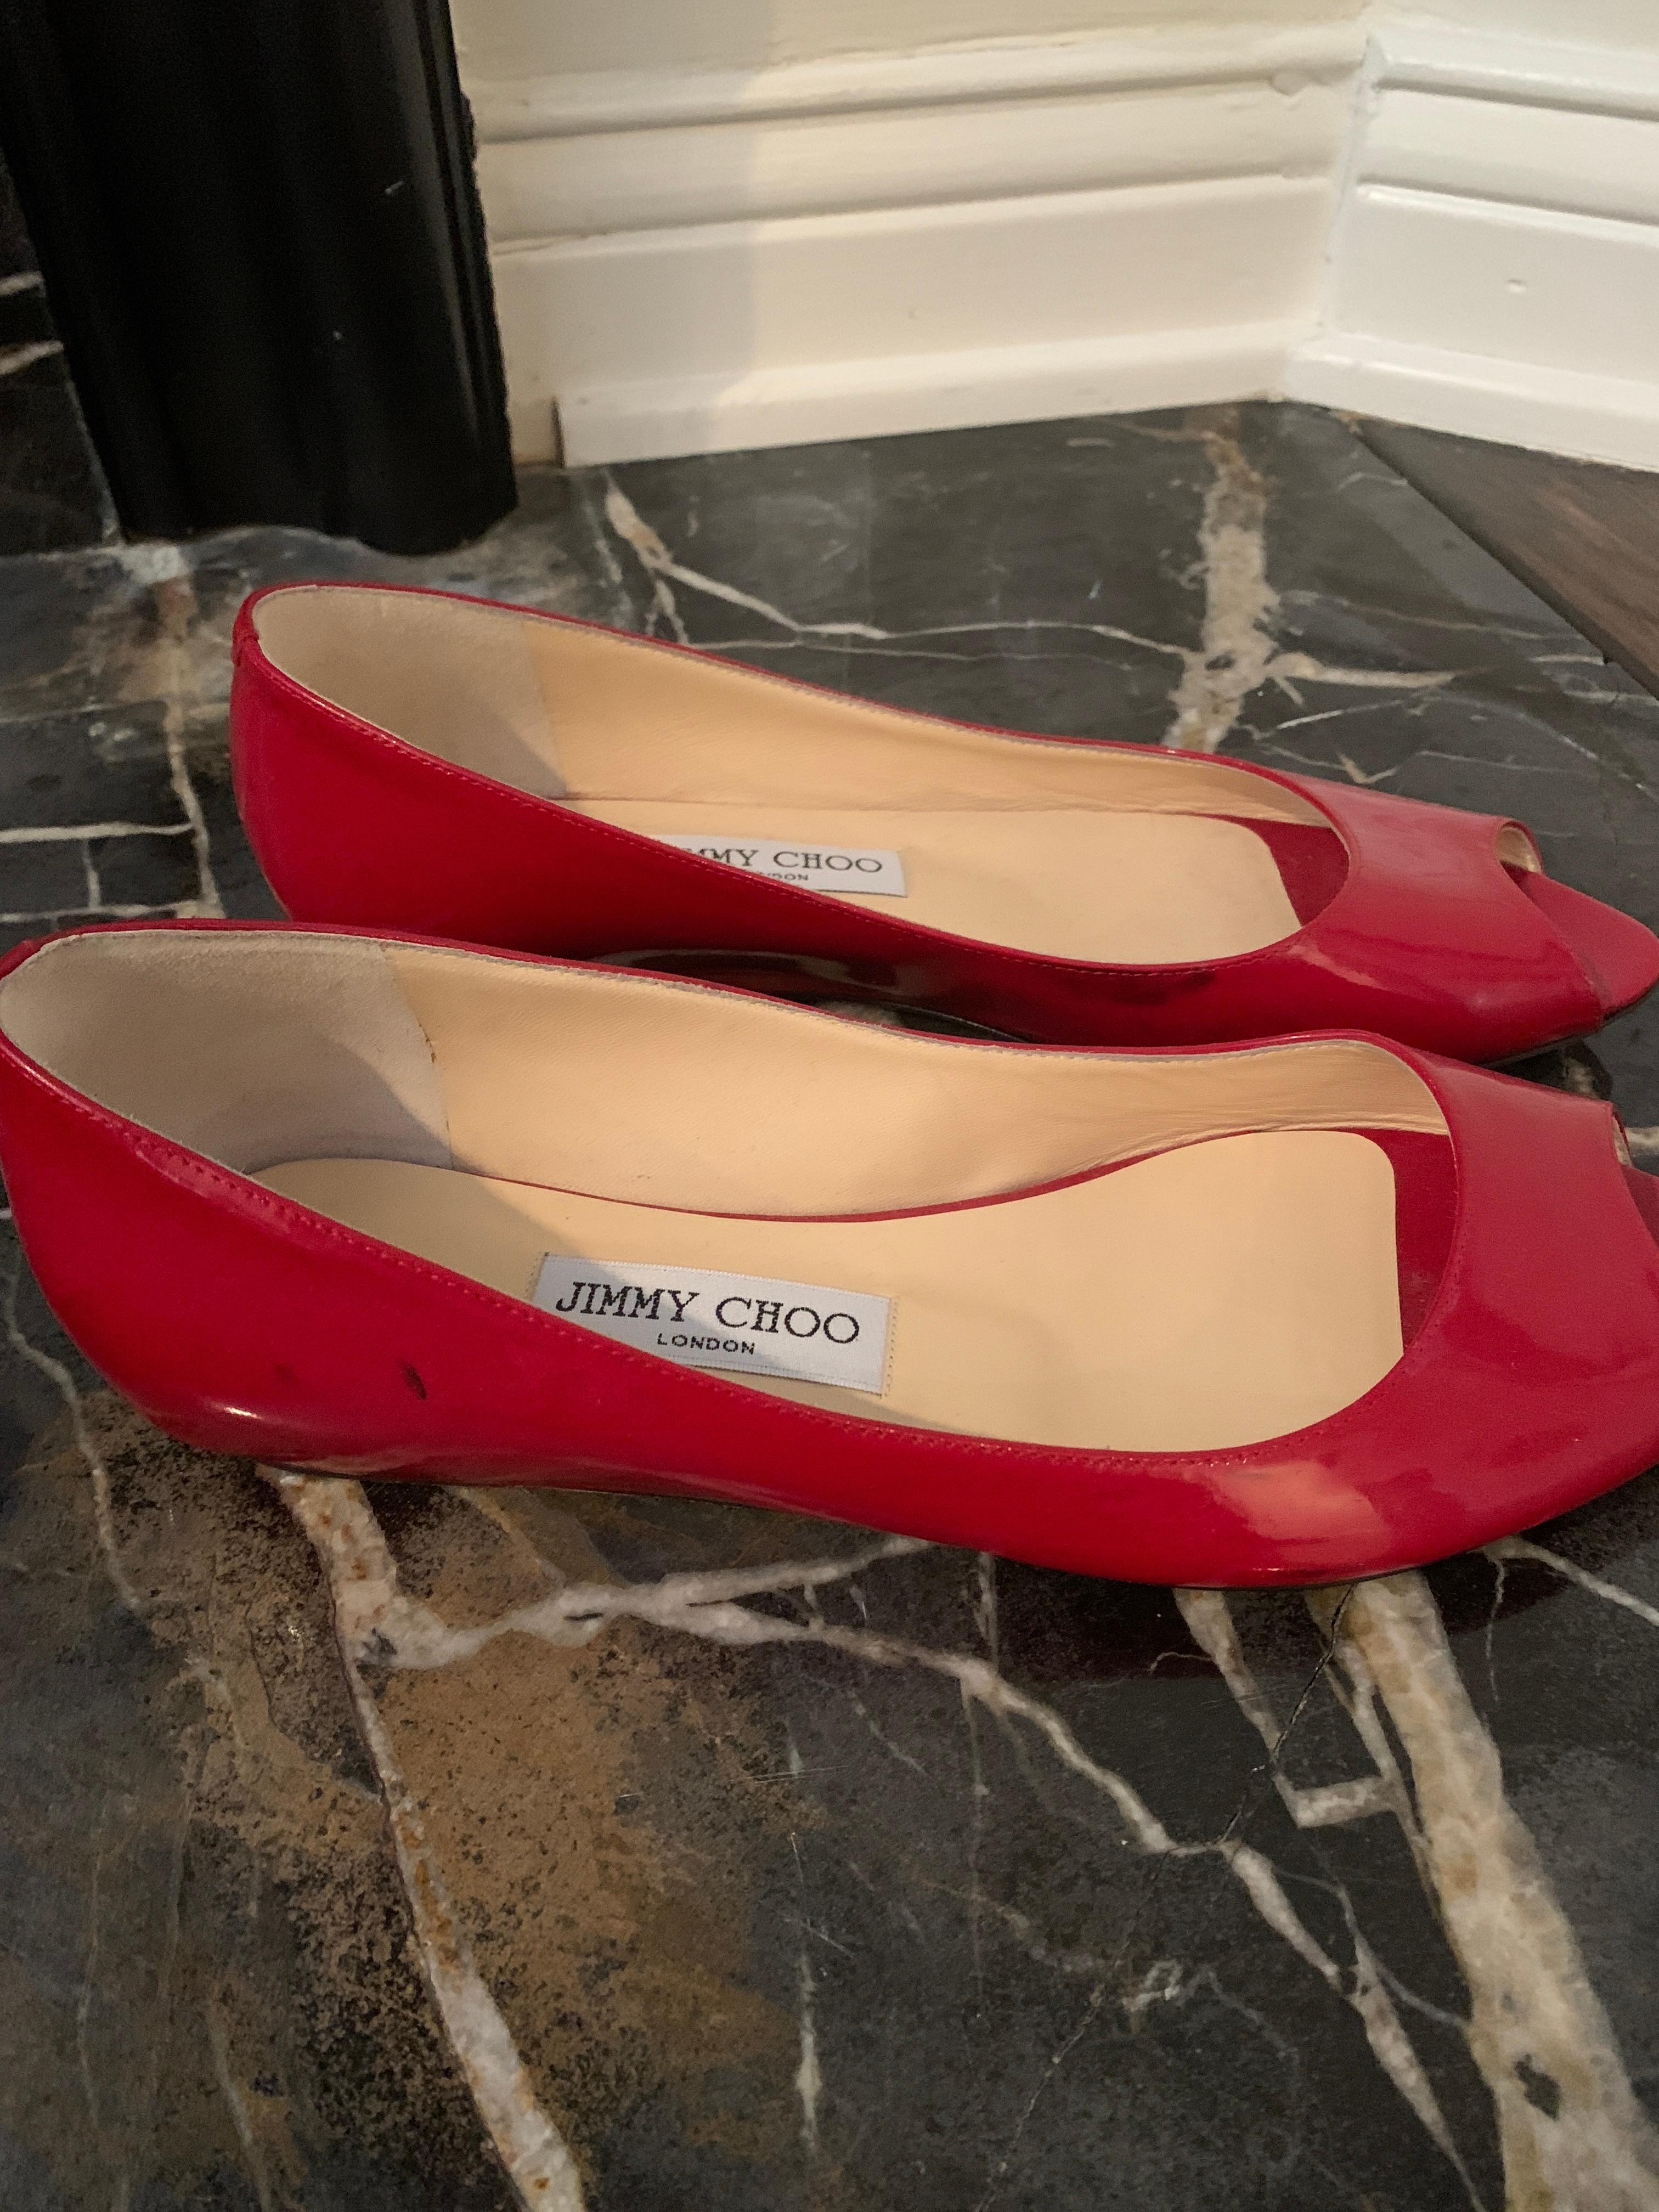 Jimmy Choo Red Patent Peep Toe Flats.
Never Been Worn. 
Size 40 
Slight Heel 